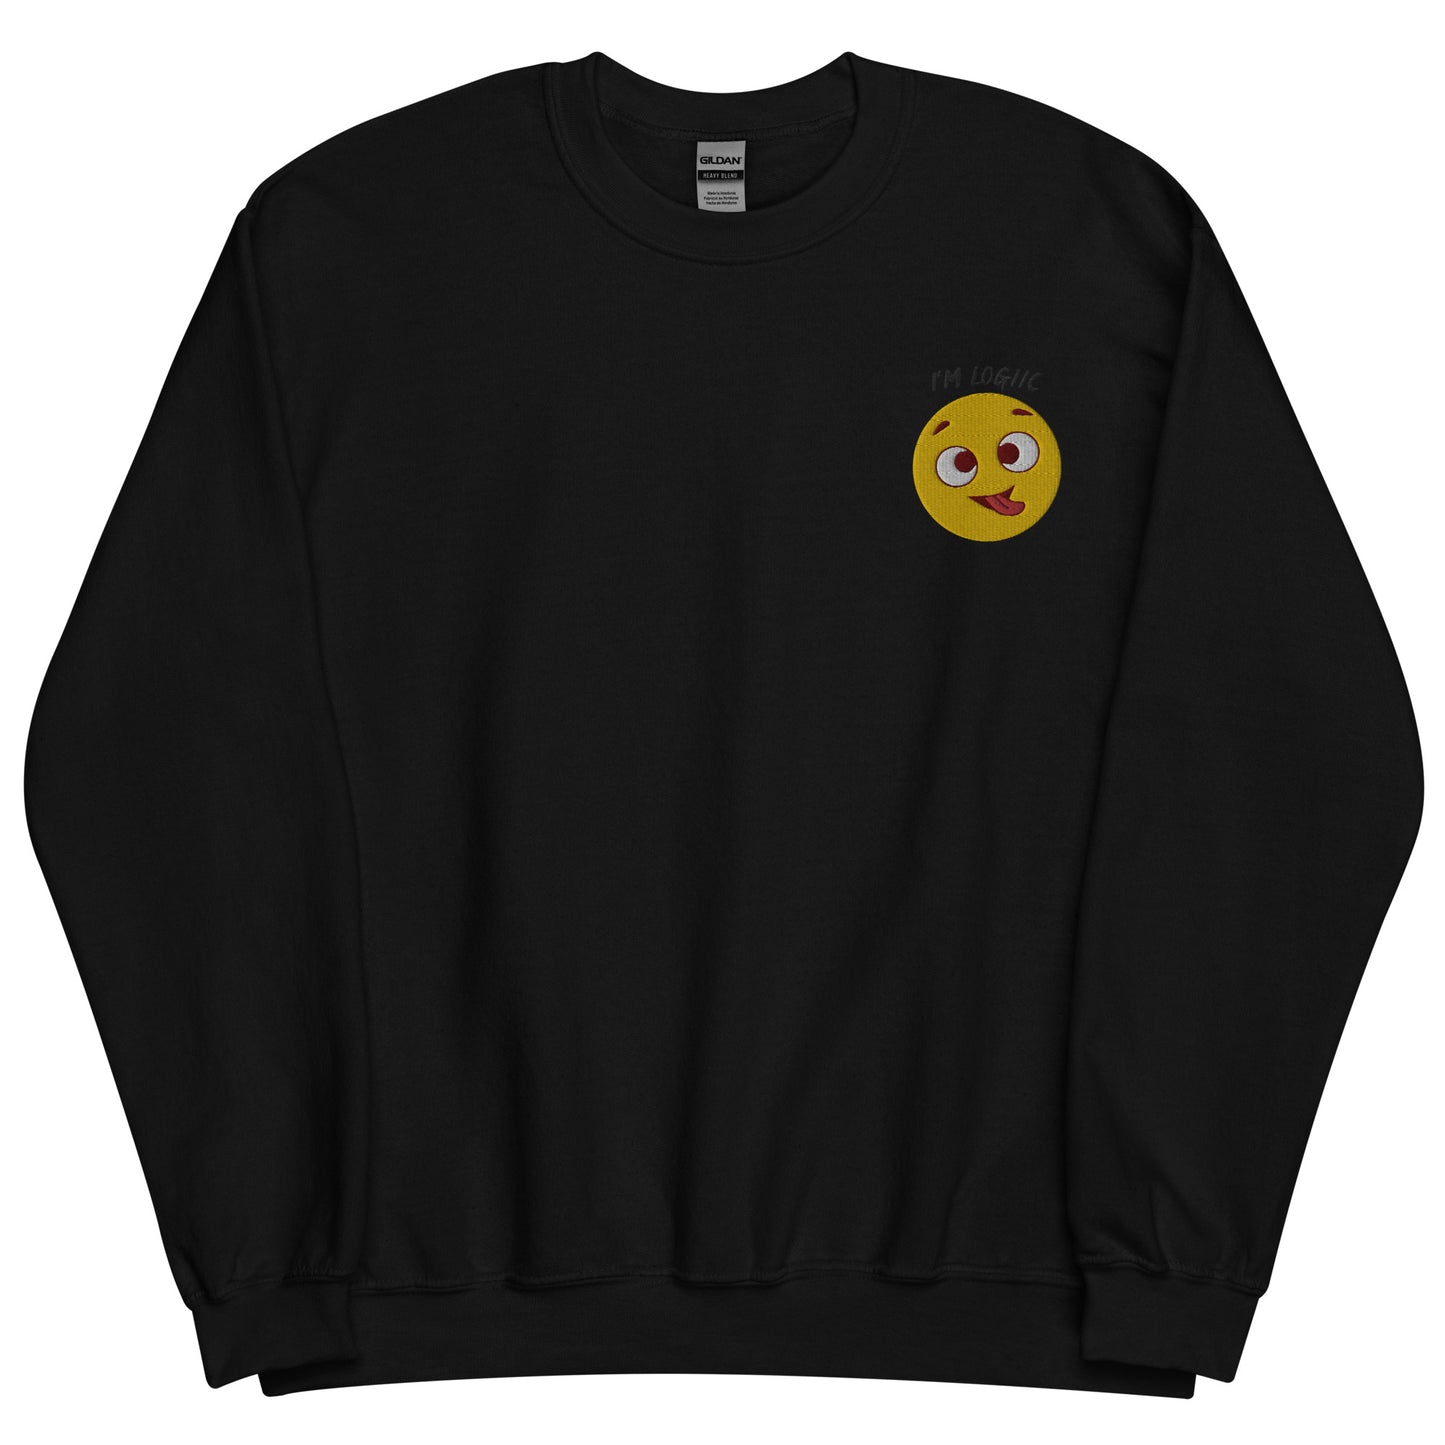 Silly Face Unisex Sweatshirt - Black / S